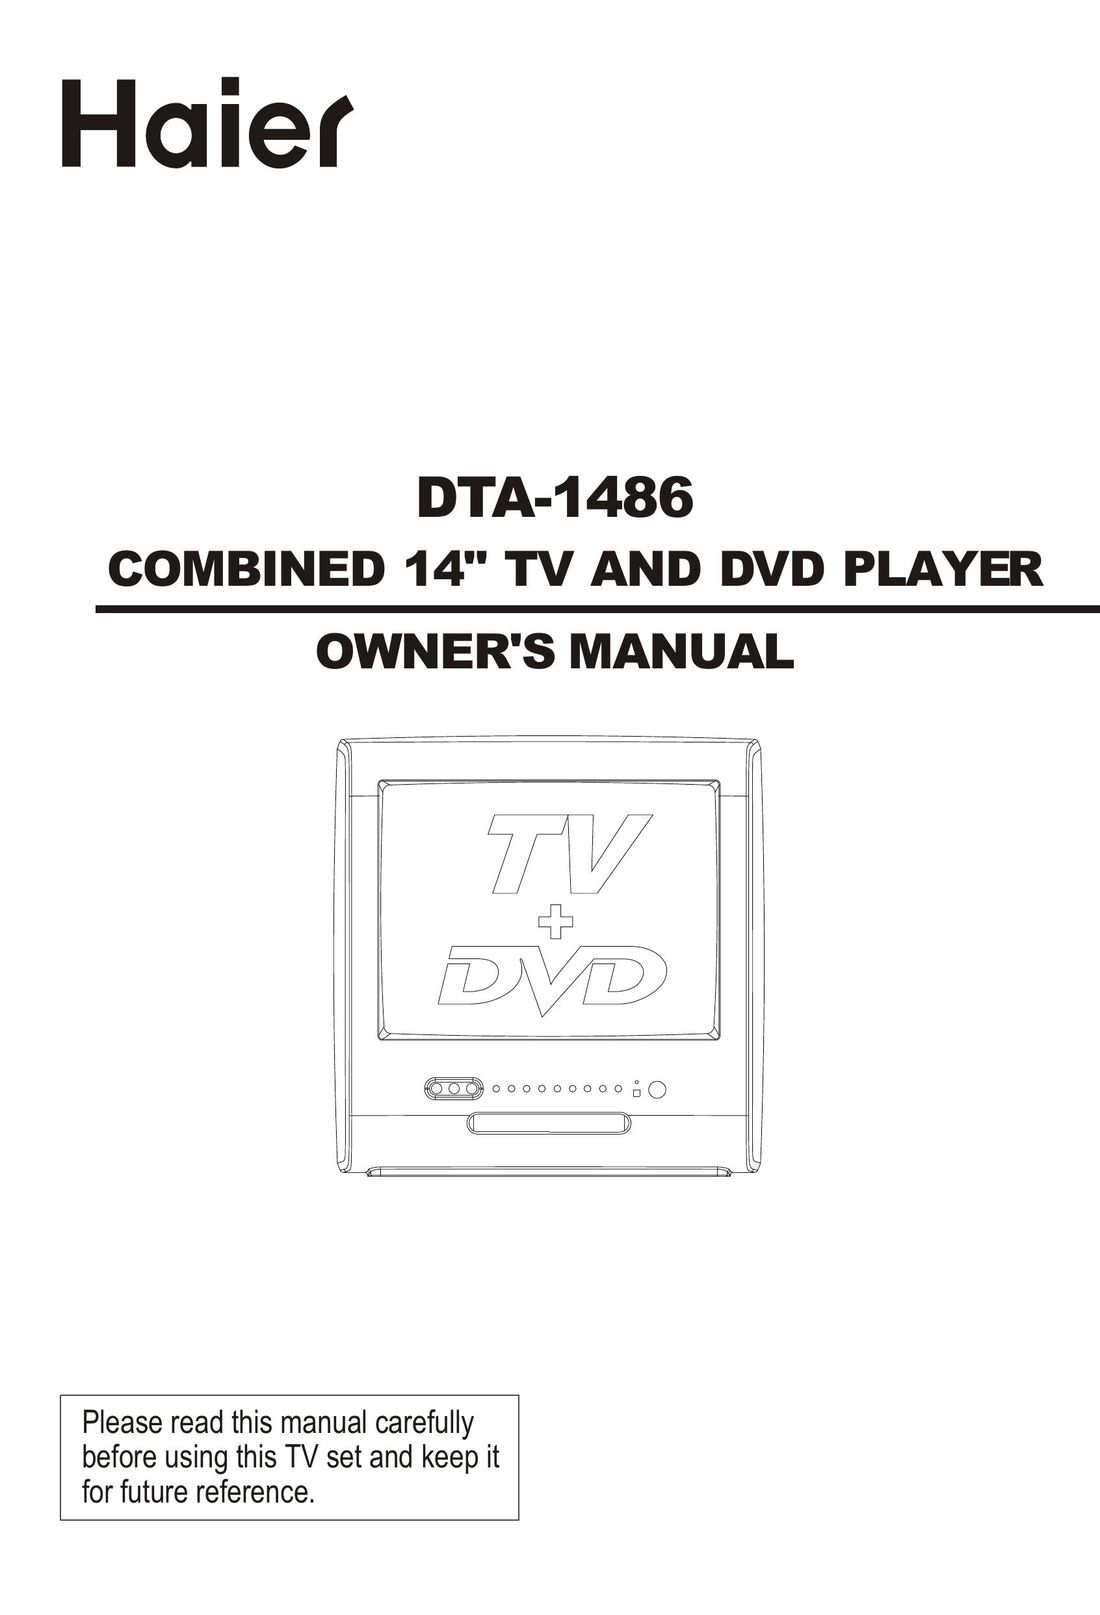 Haier DTA-1486 DVD Player User Manual